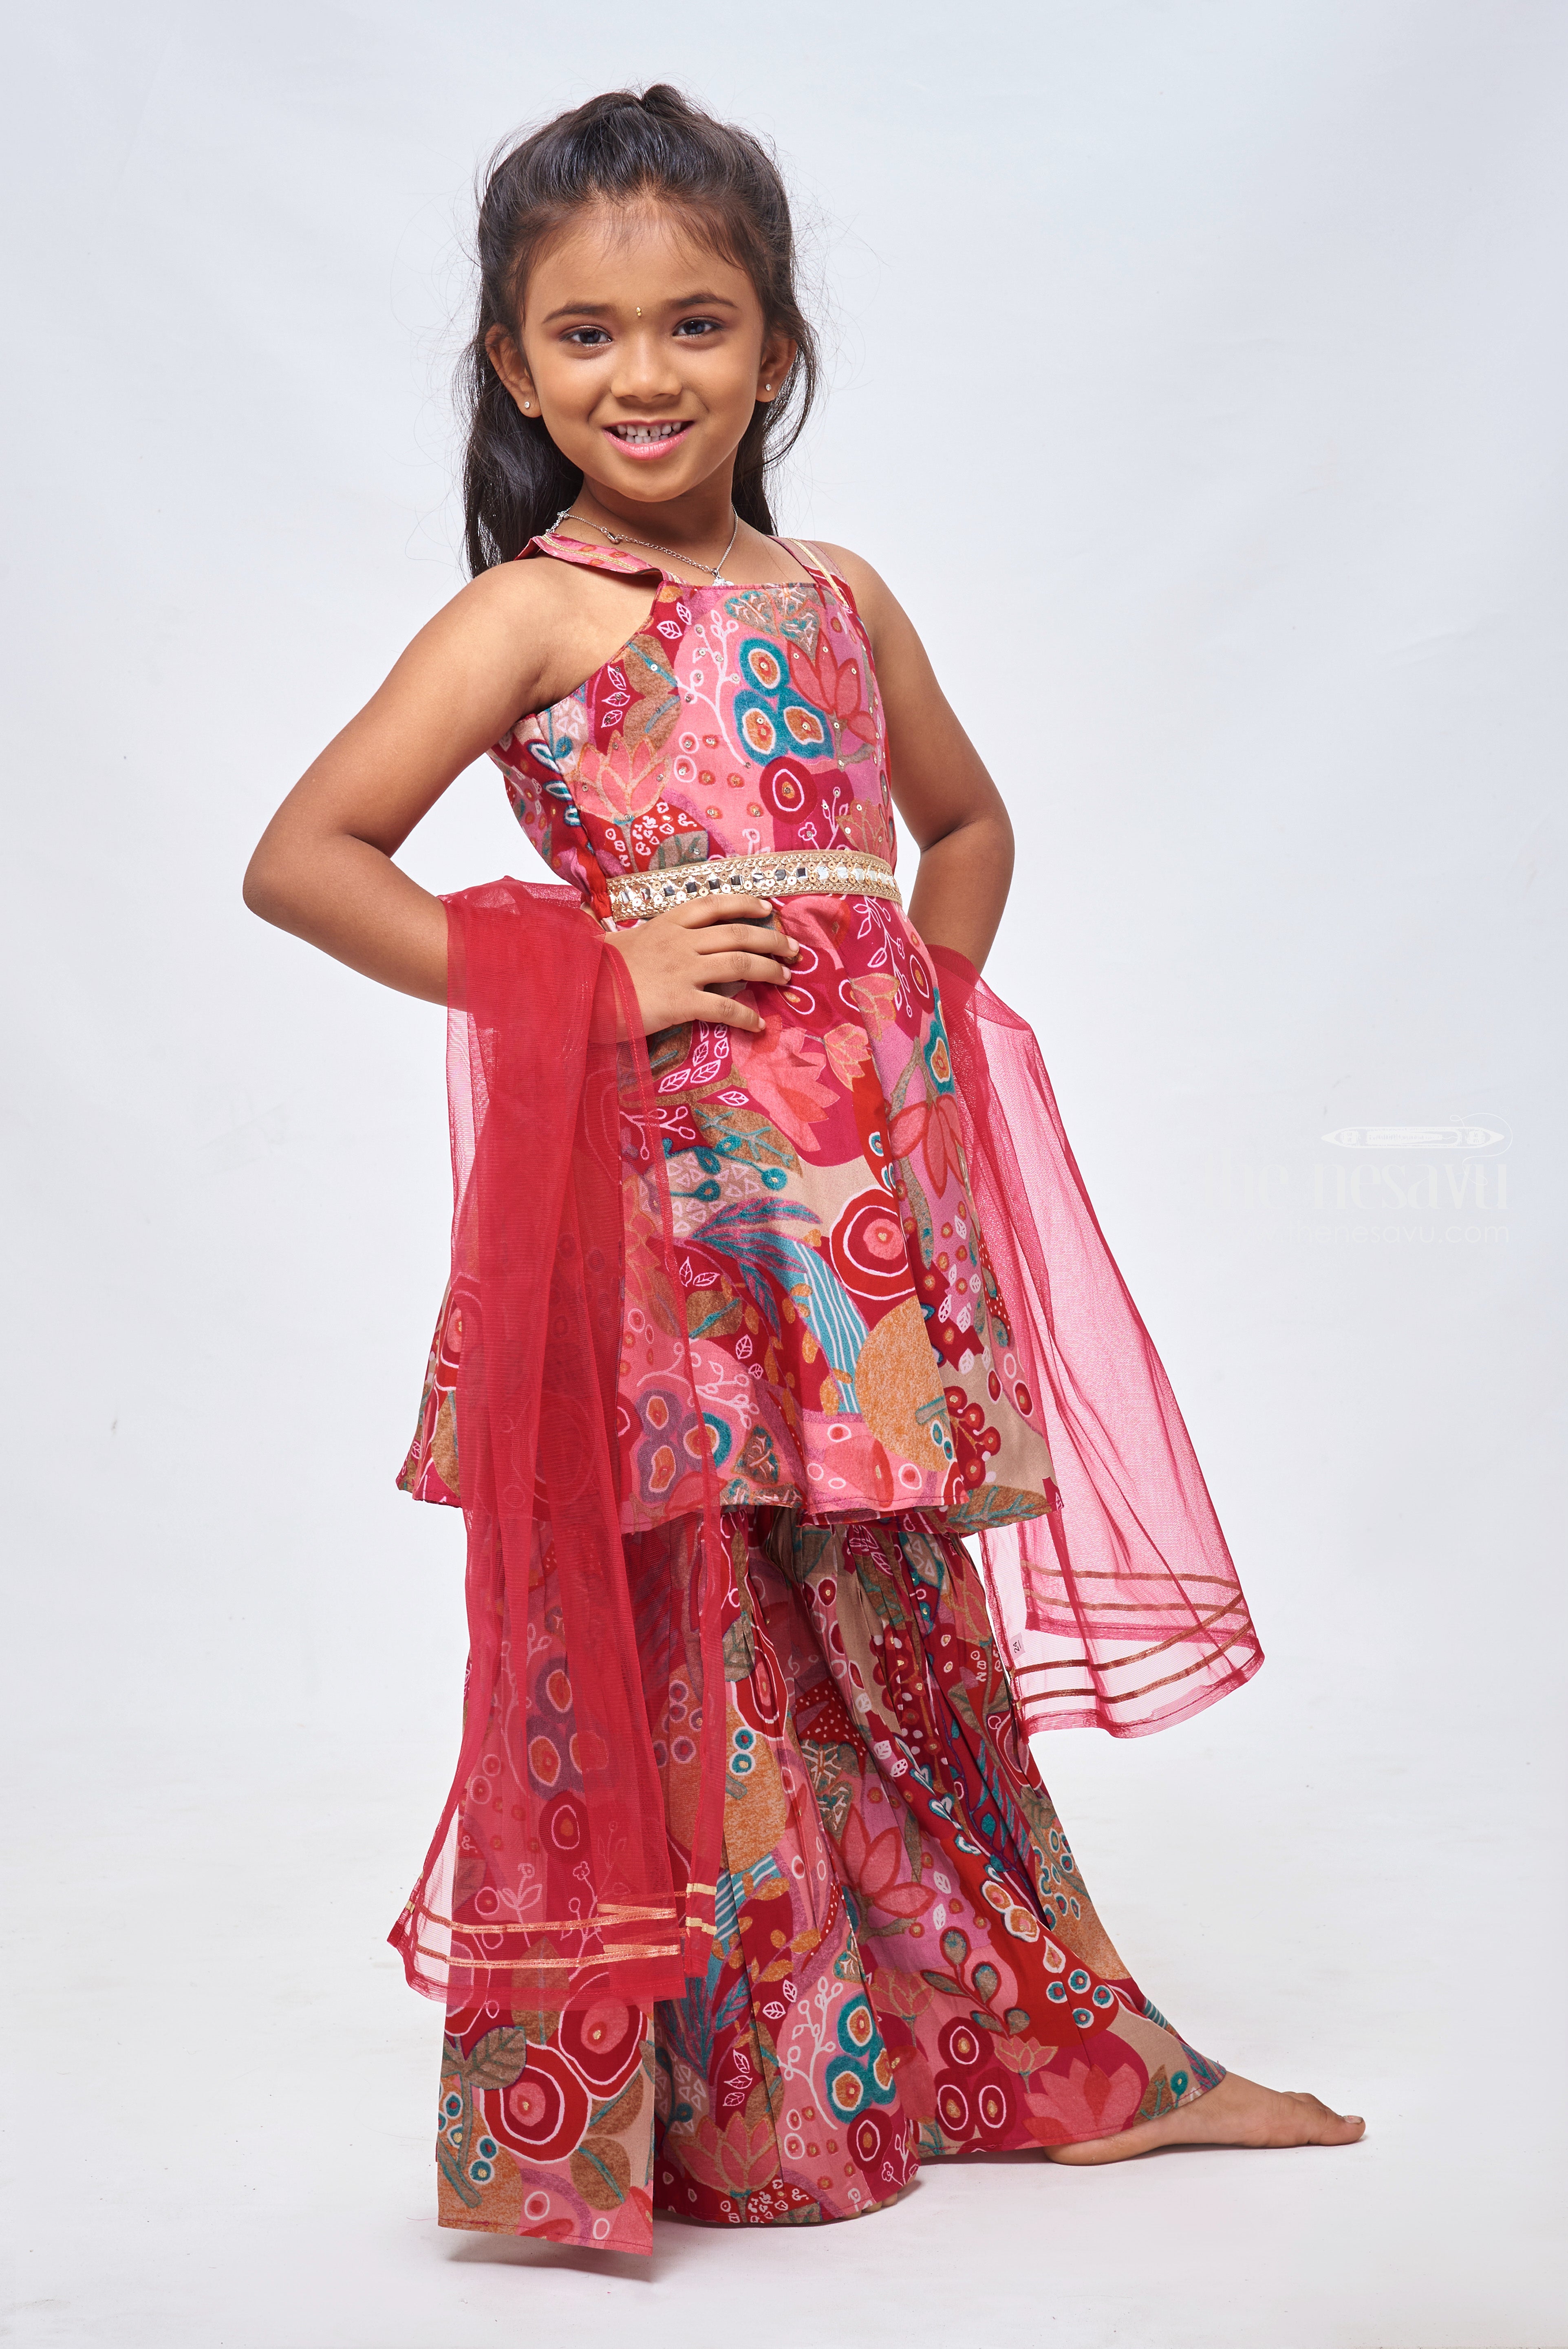 Indian girl traditional dress Vectors & Illustrations for Free Download |  Freepik